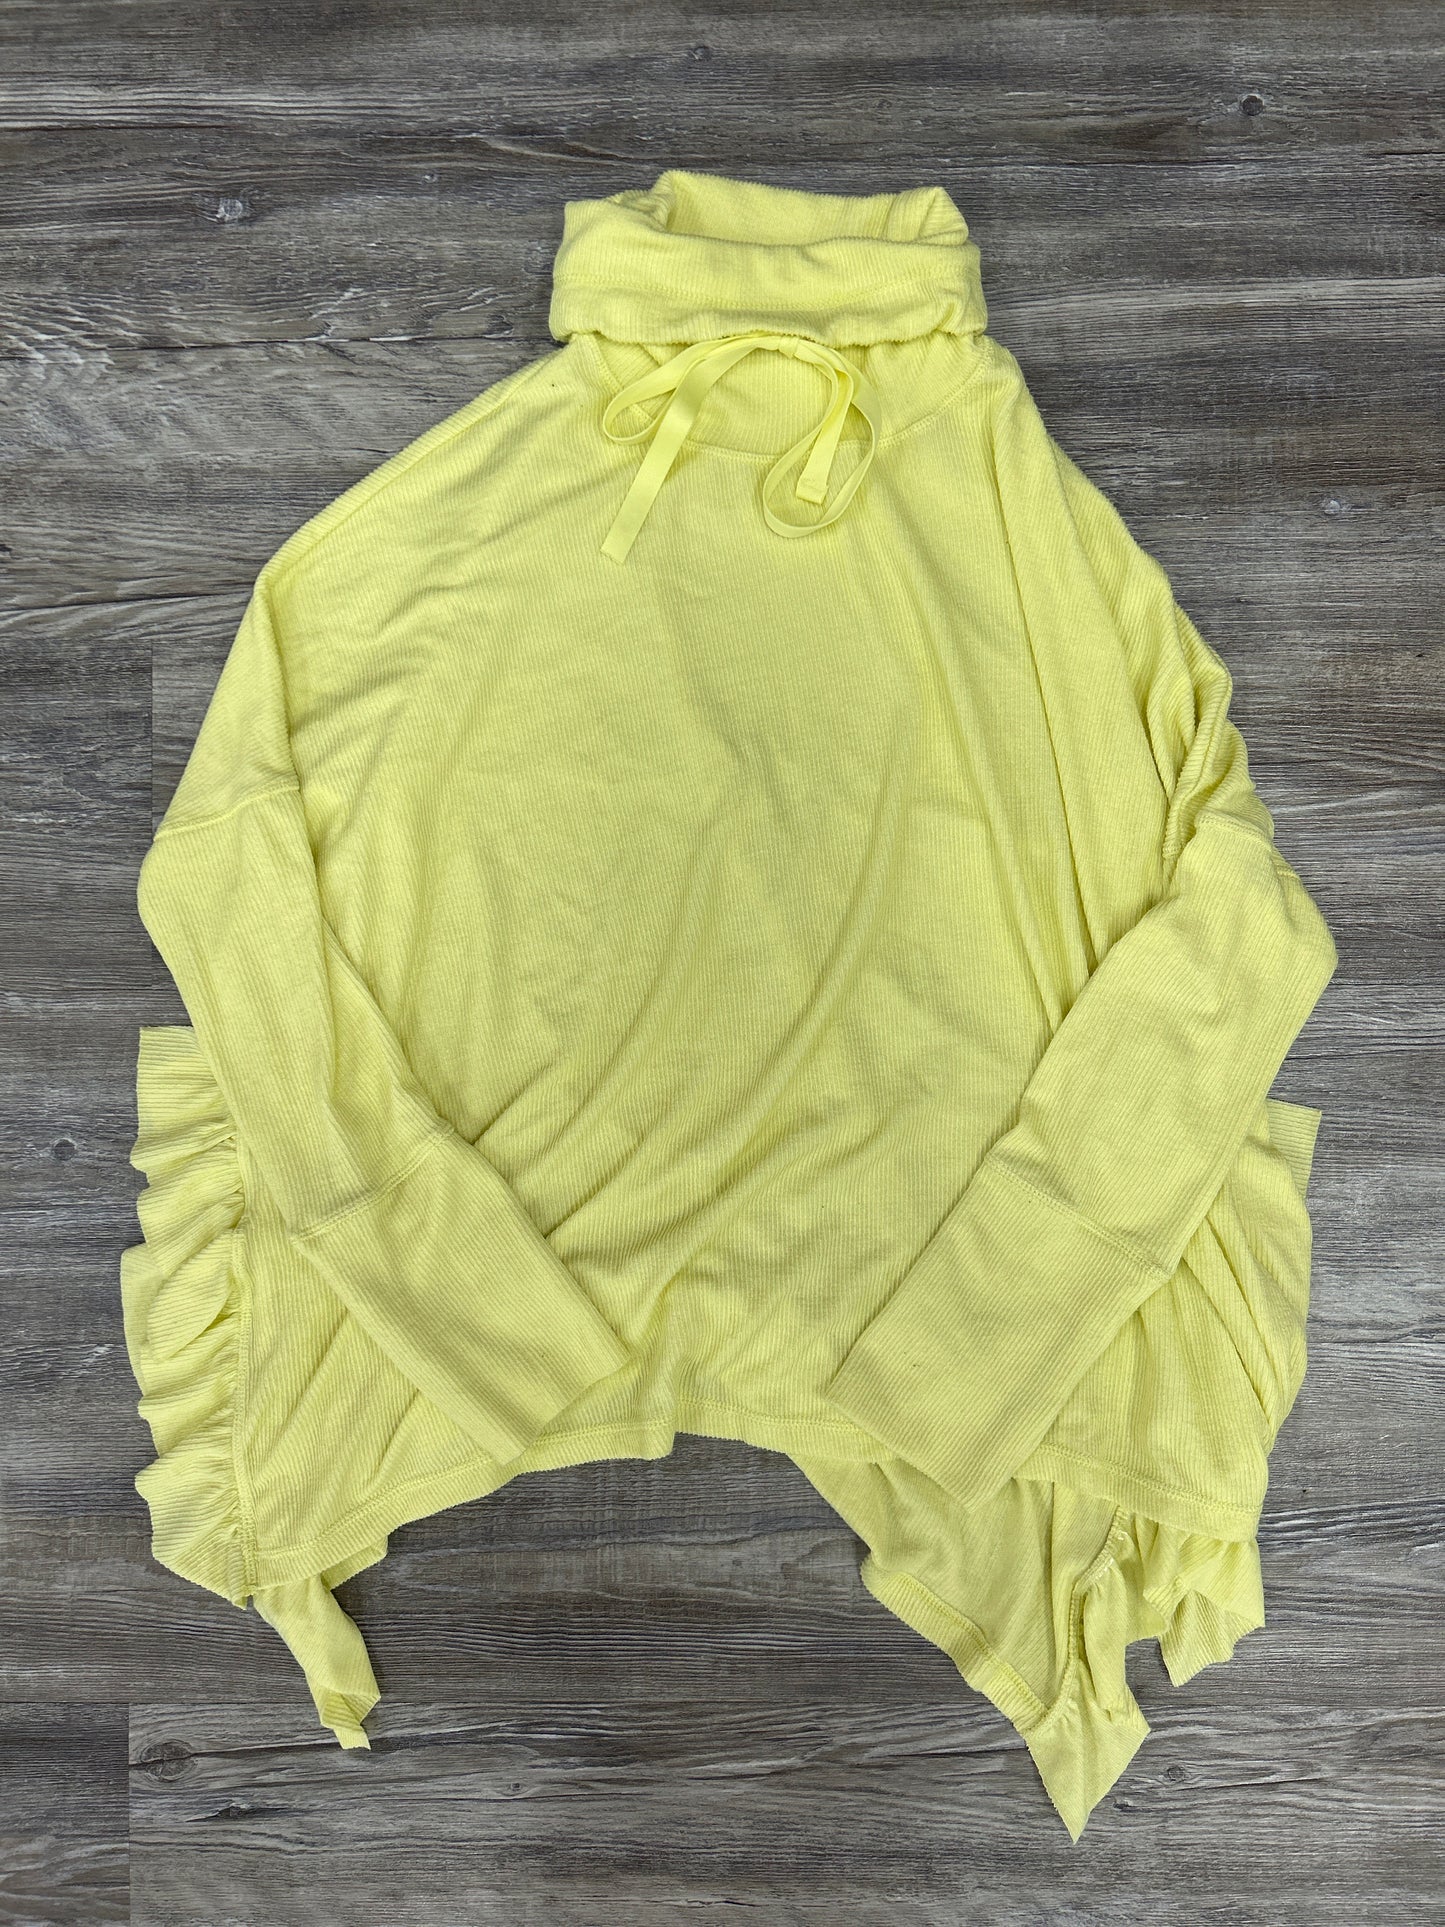 Yellow Athletic Sweatshirt Crewneck Free People, Size M